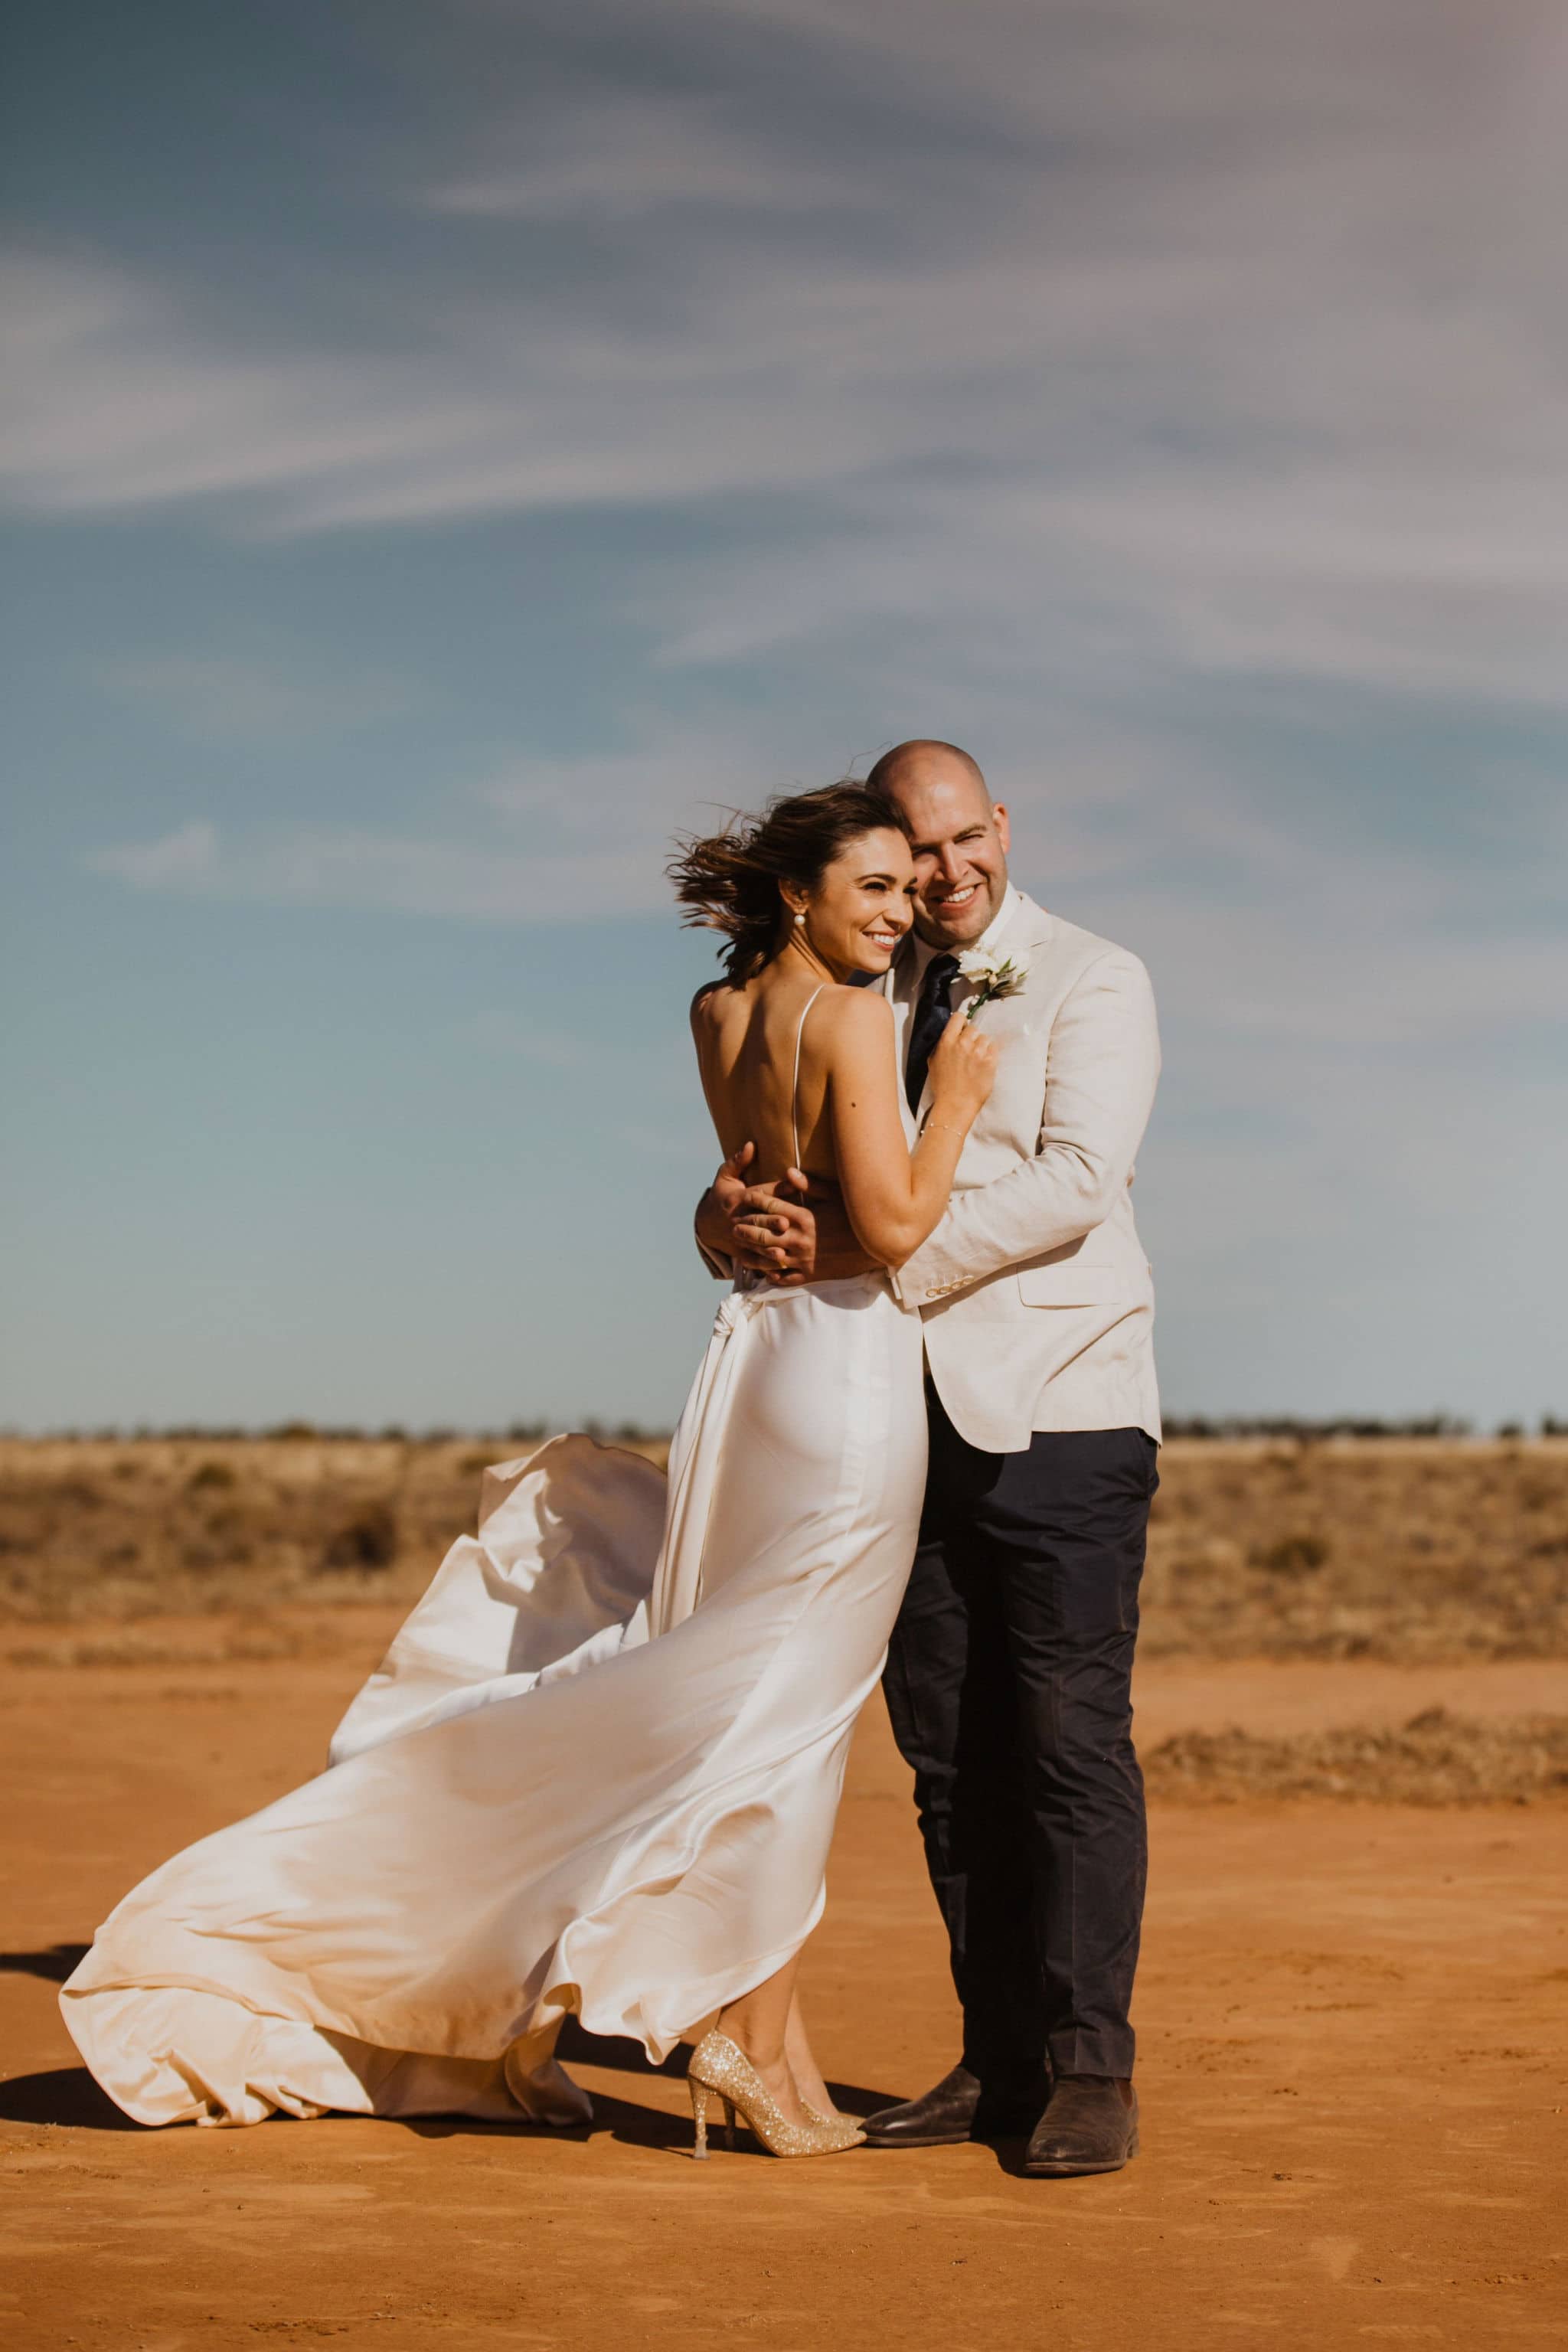 The Photos - Brisbane Wedding Photographer | Australia | Worldwide